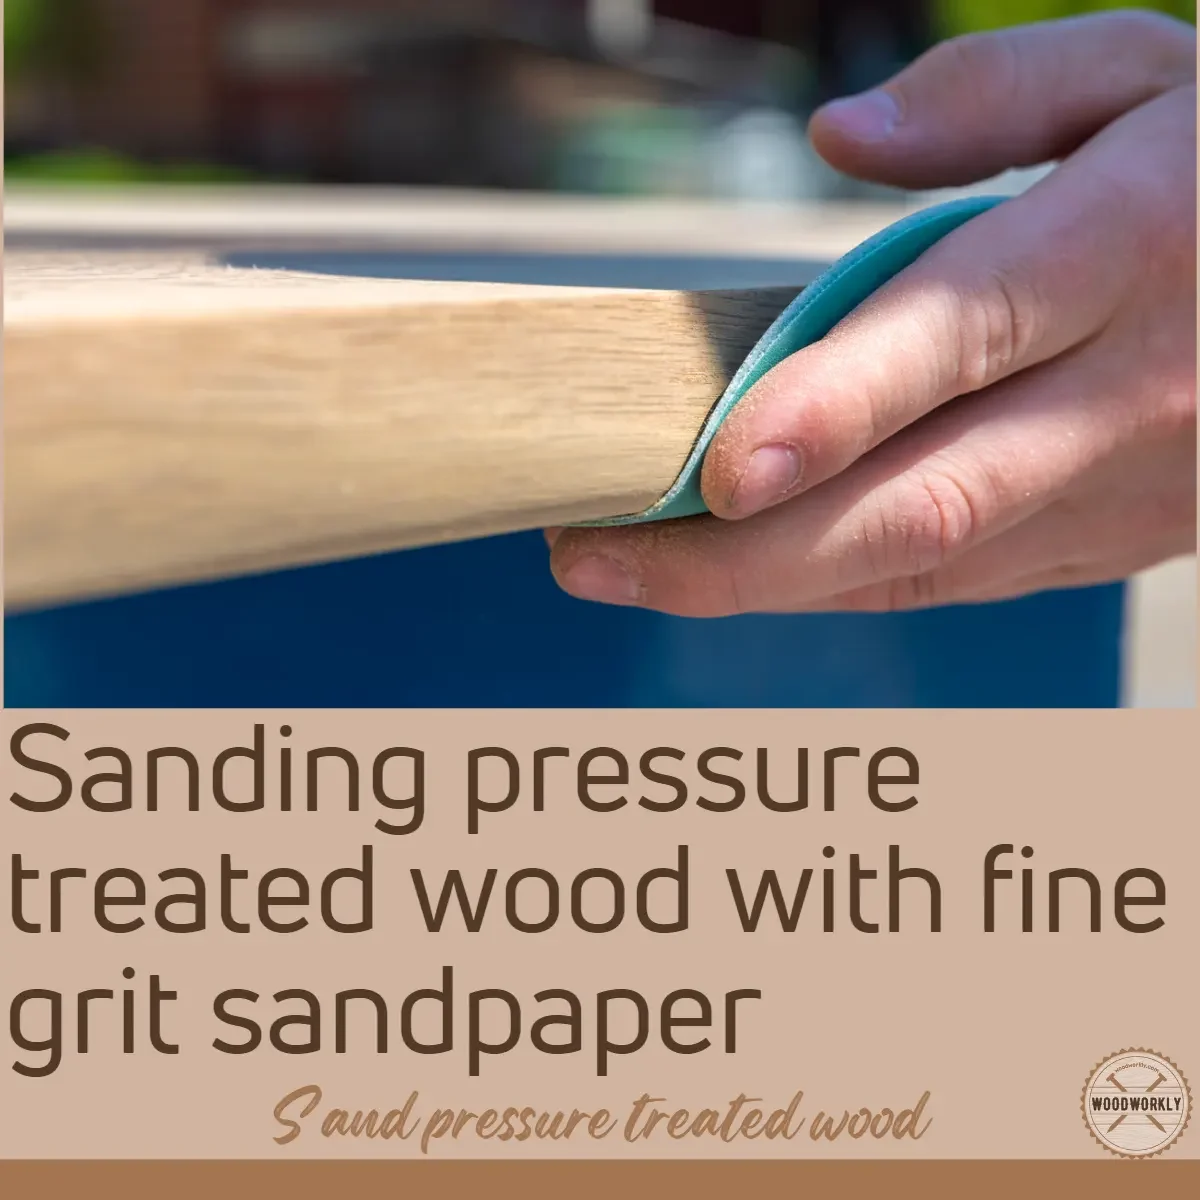 Sanding pressure treated wood with fine grit sandpaper